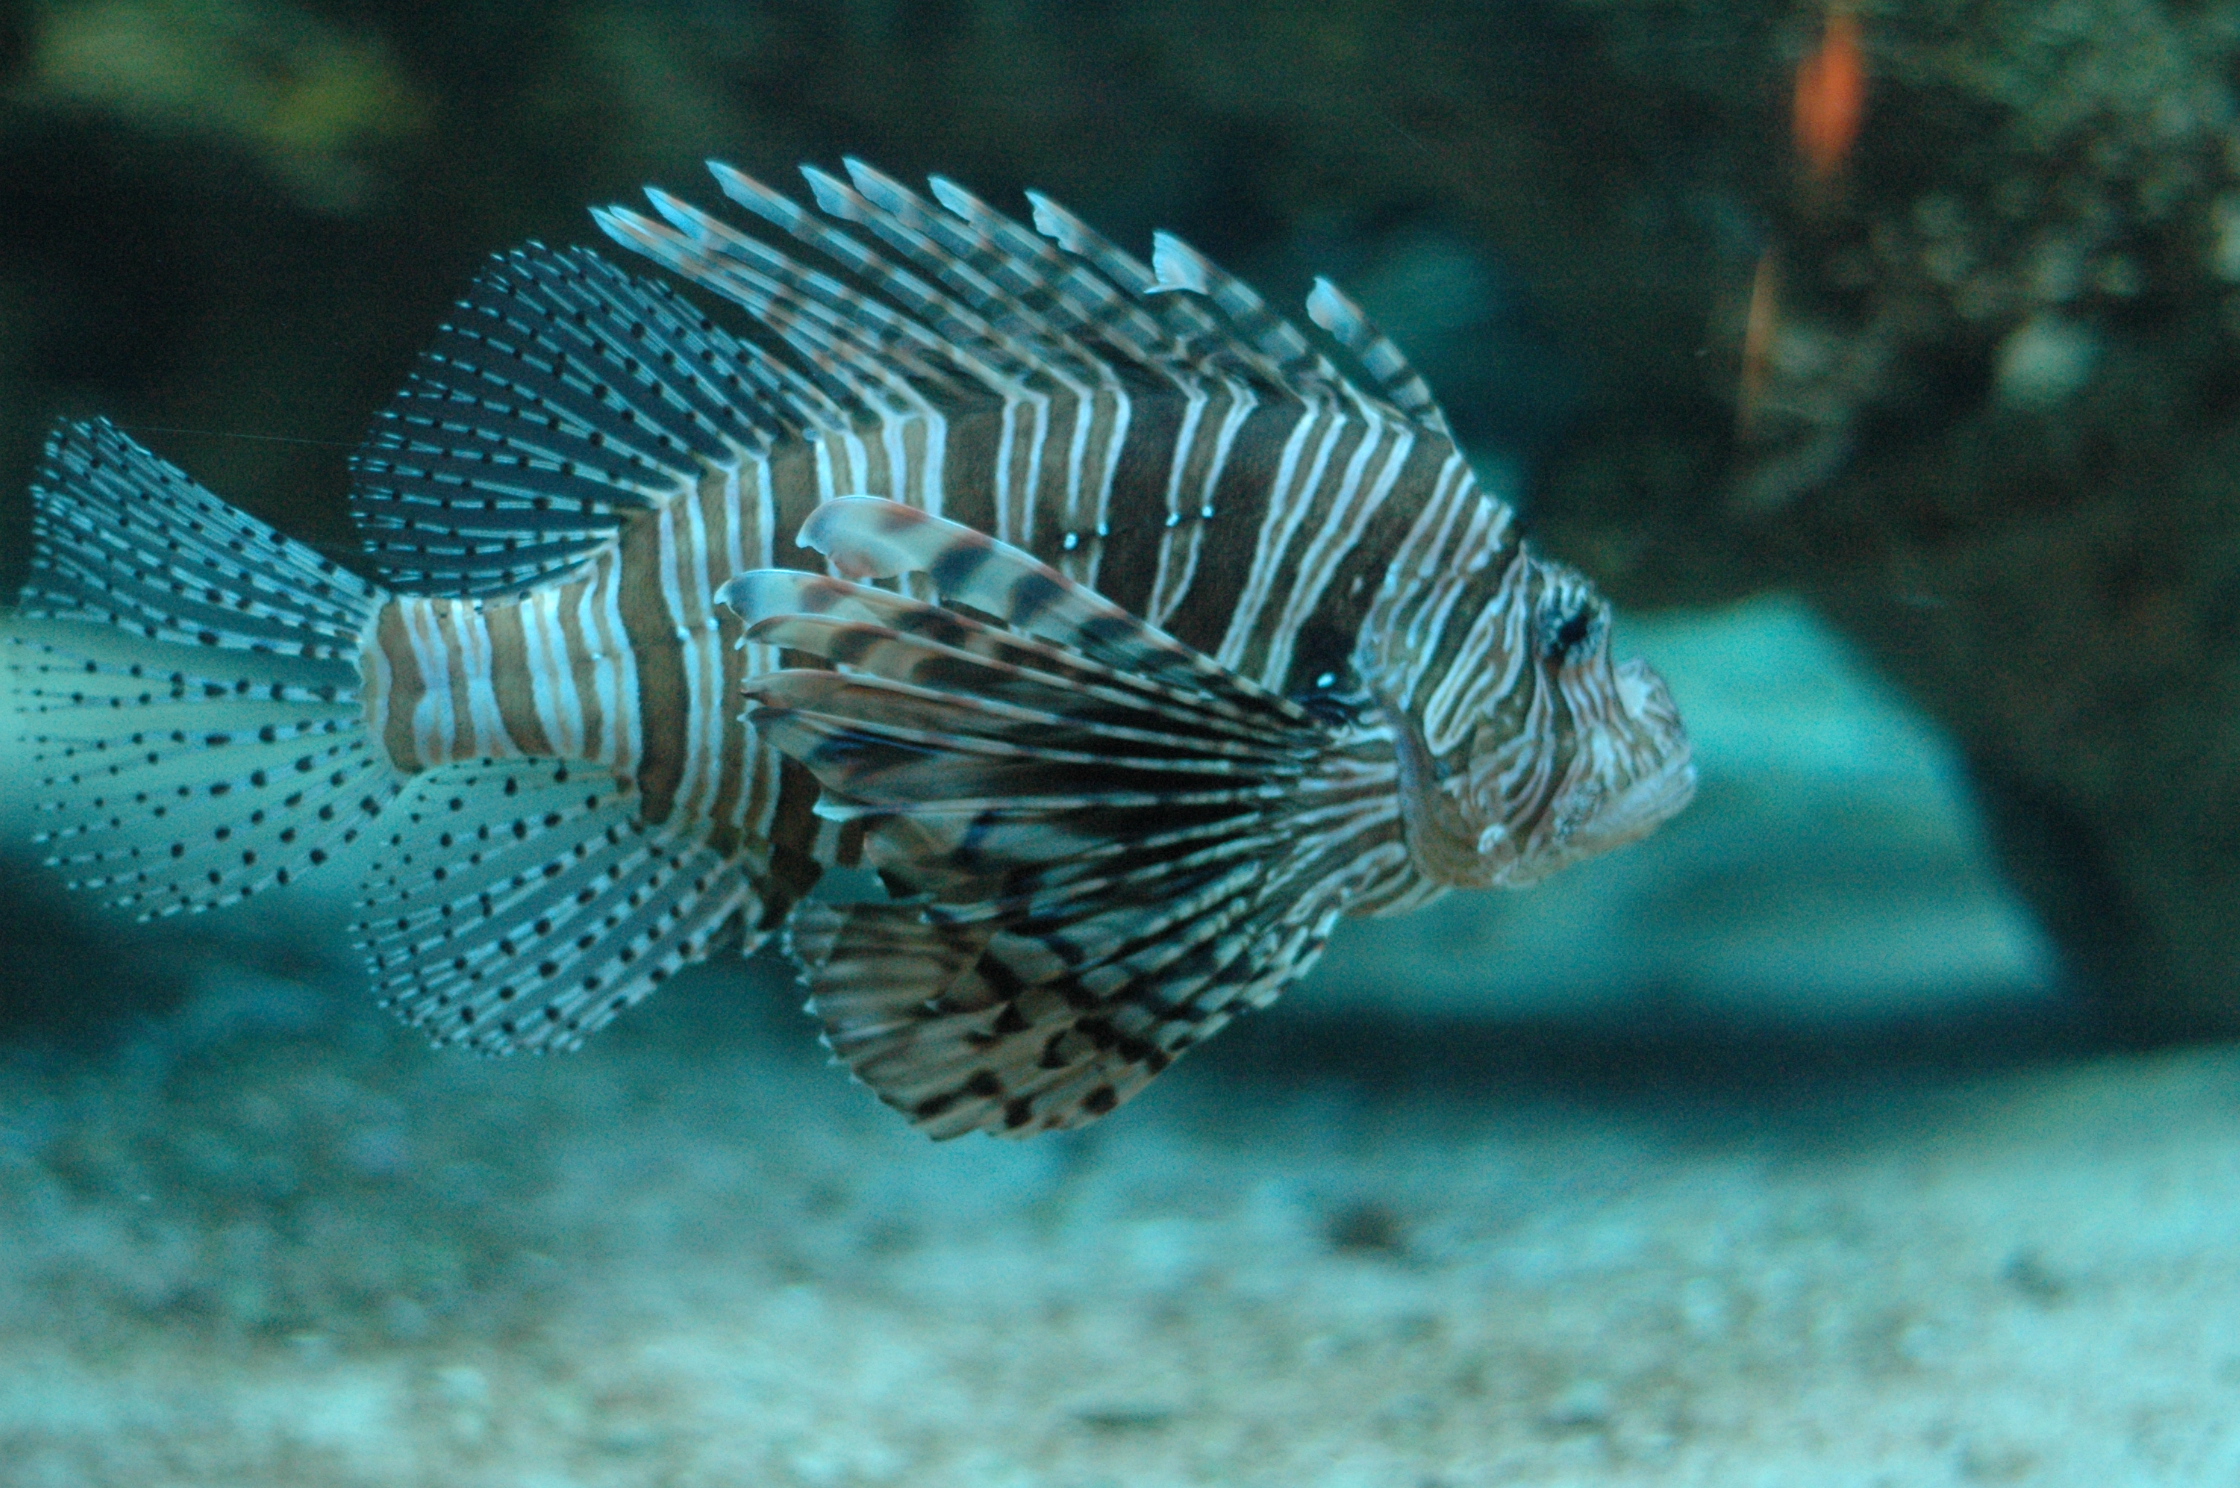 a close up of an aquarium fish in the ocean